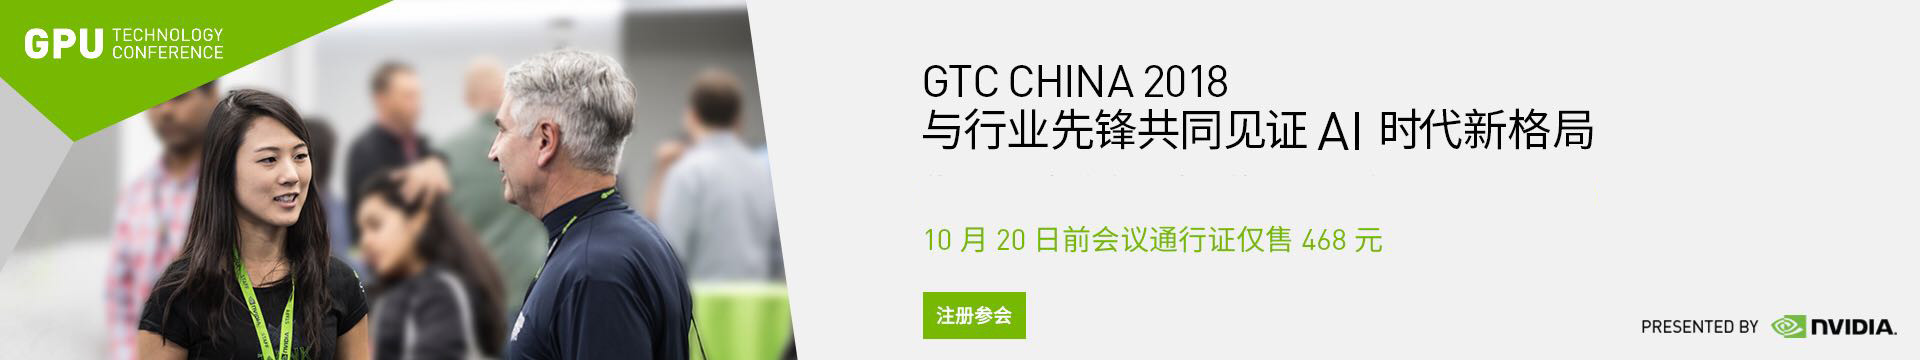 GTC CHINA 2018 ( GPU 技术大会 )